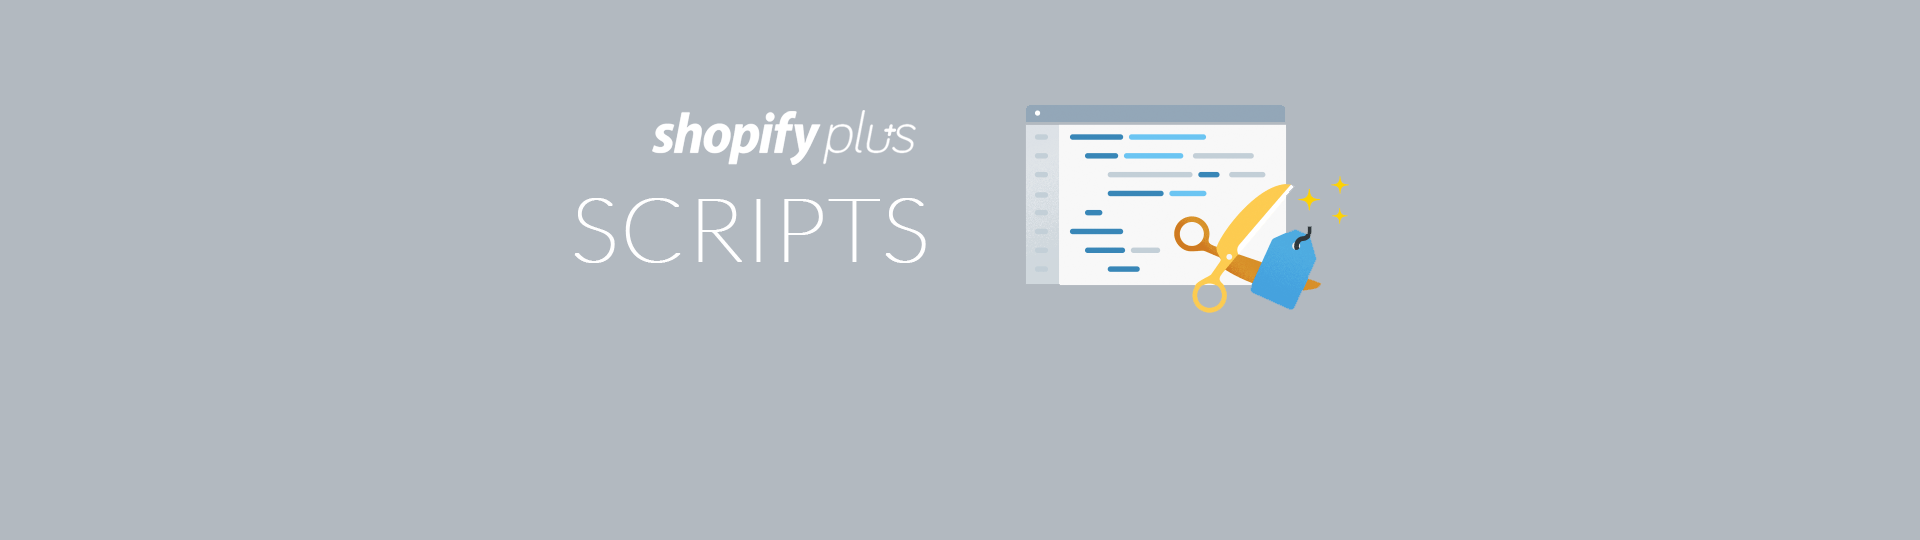 Shopify Scripts for Shopify Plus ecommerce platform